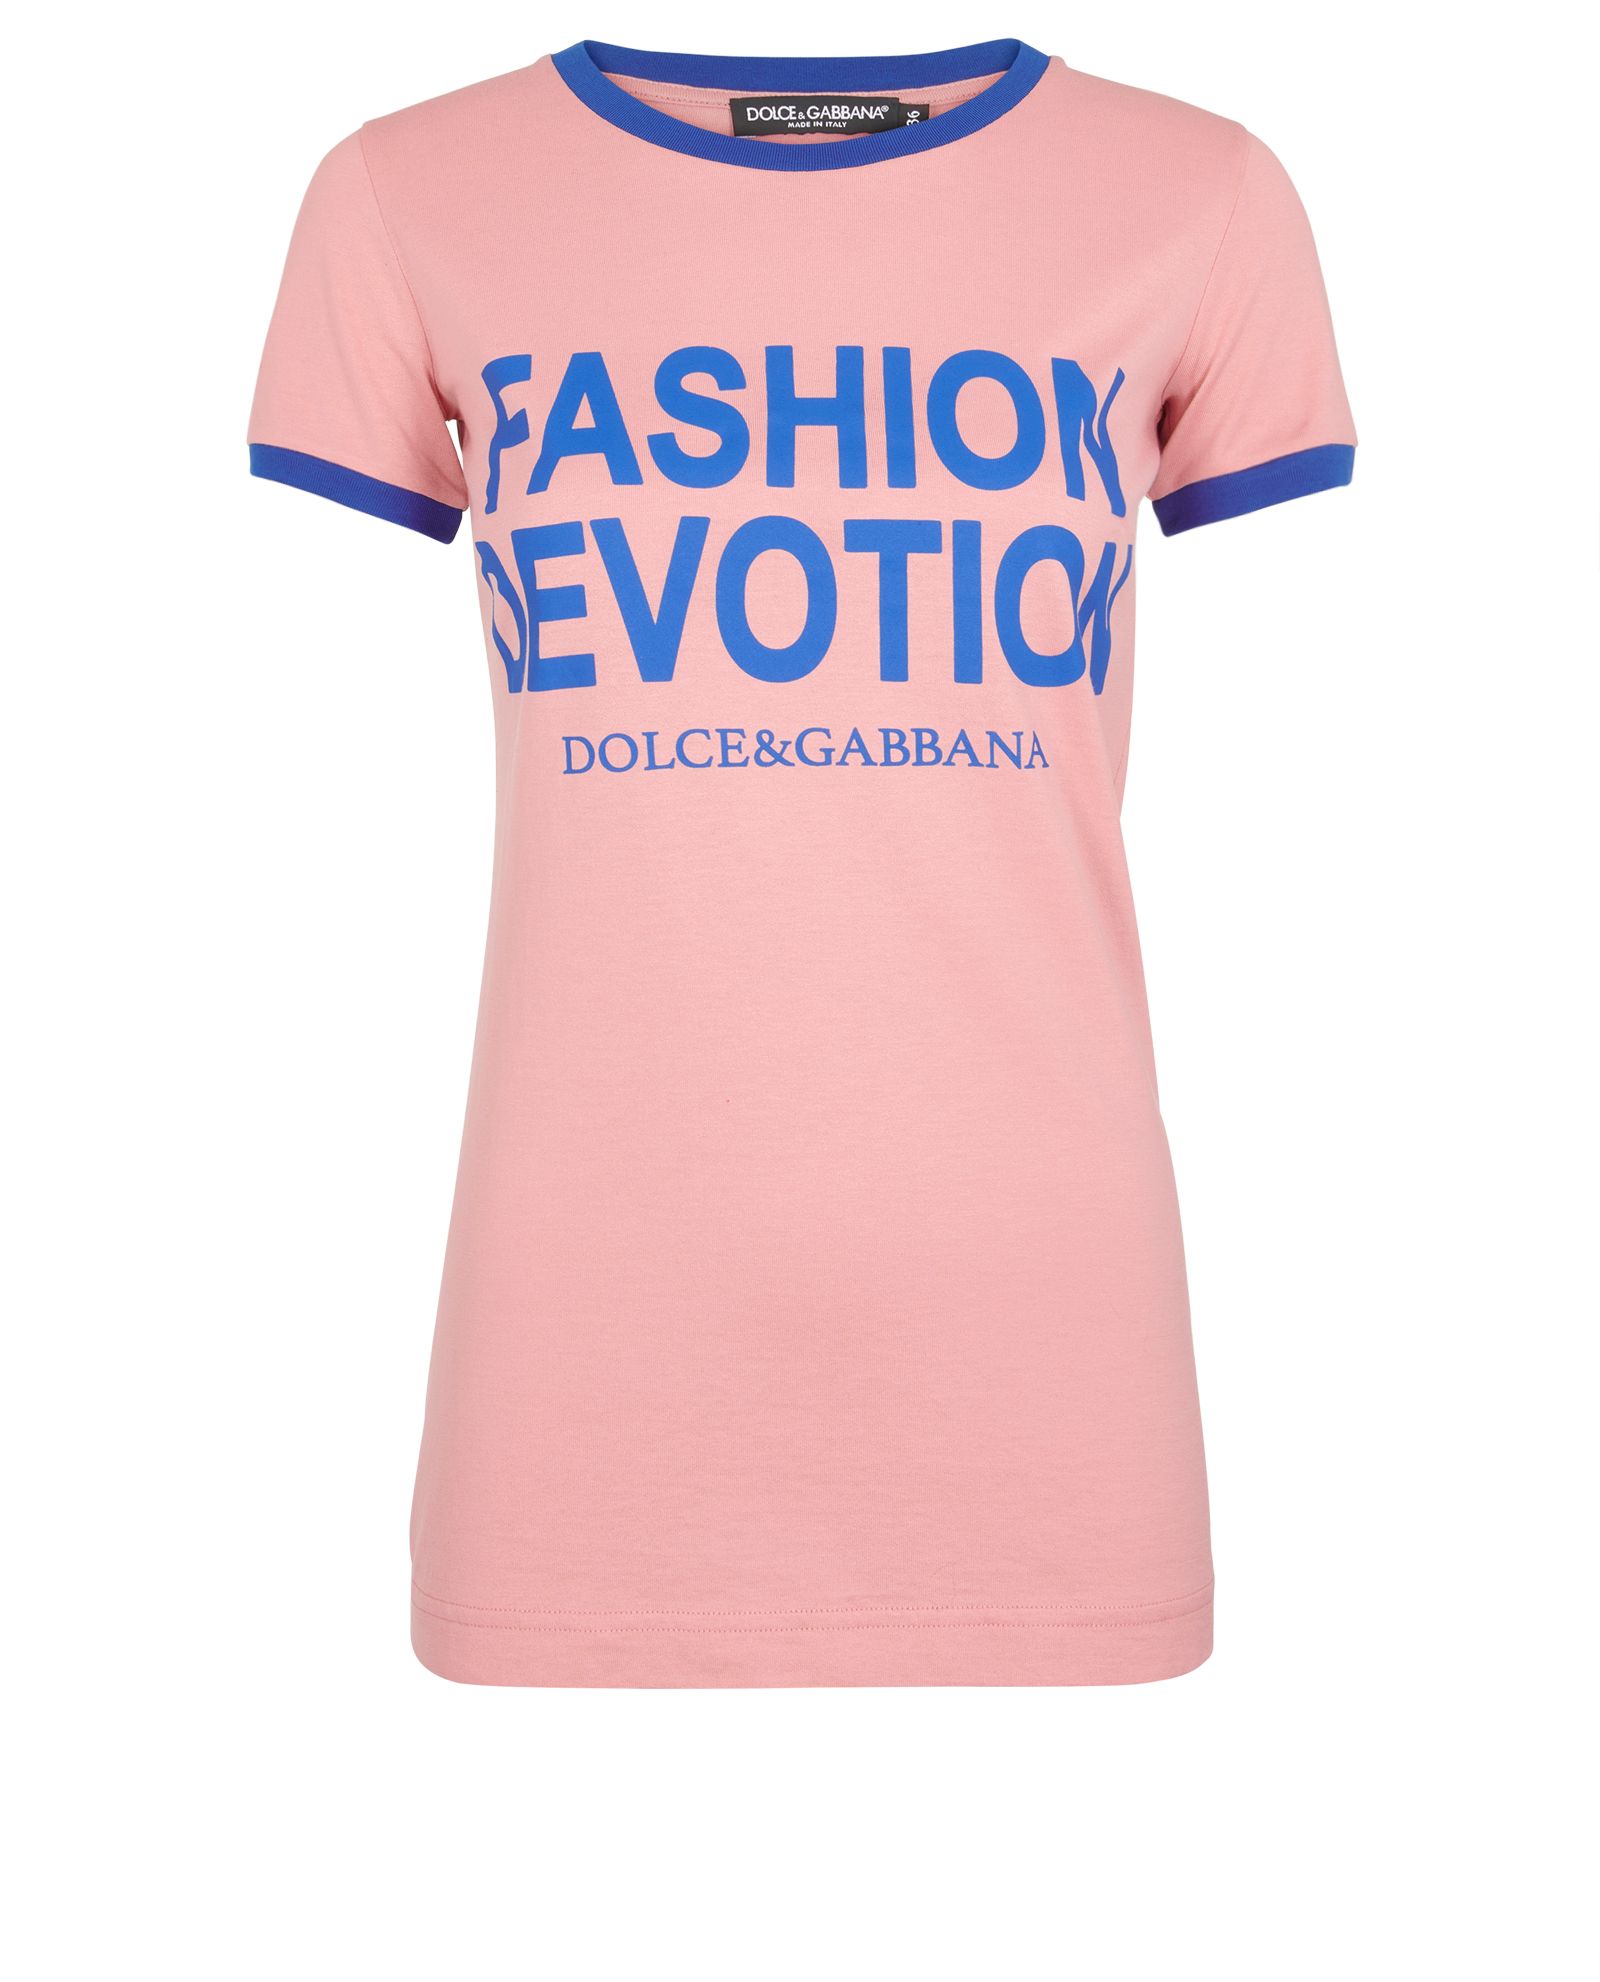 Dolce & Gabbana Fashion Devotion T-Shirt, Tops - Designer Exchange | Buy  Sell Exchange